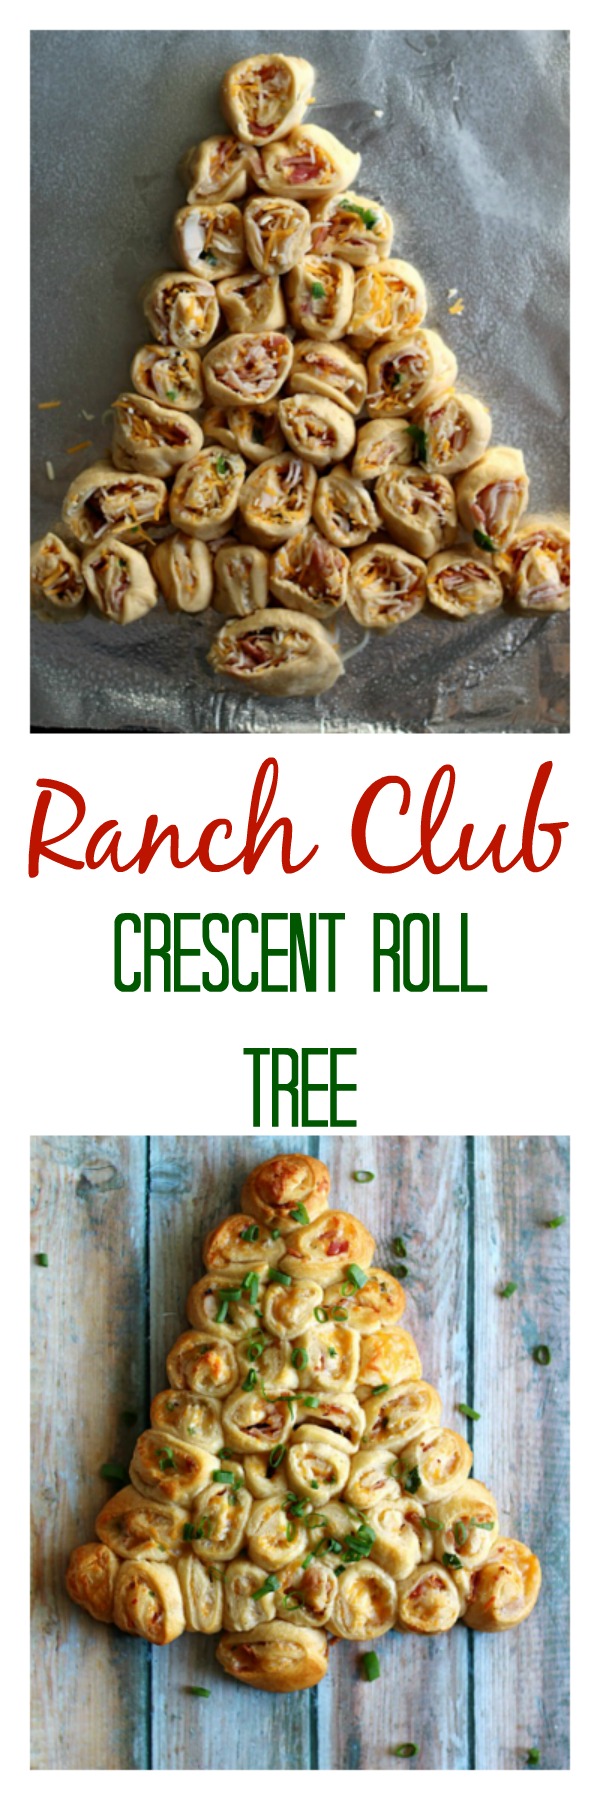 ranch-club-crescent-roll-tree